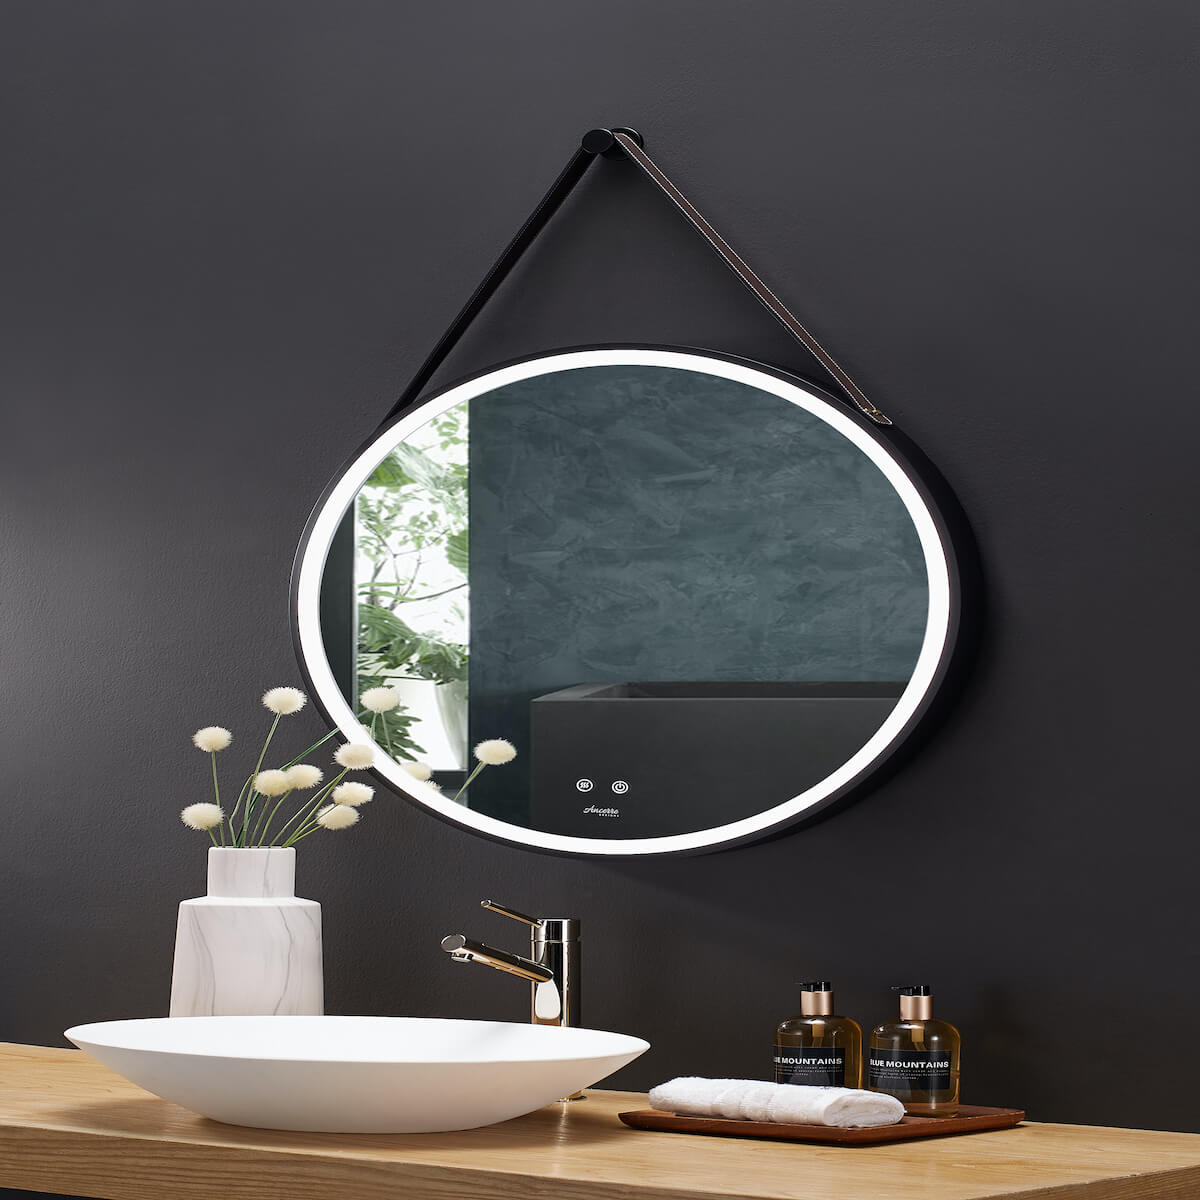 Ancerre Designs 30" LED Sangle Mirror LEDM-SANGLE-30-B Angle